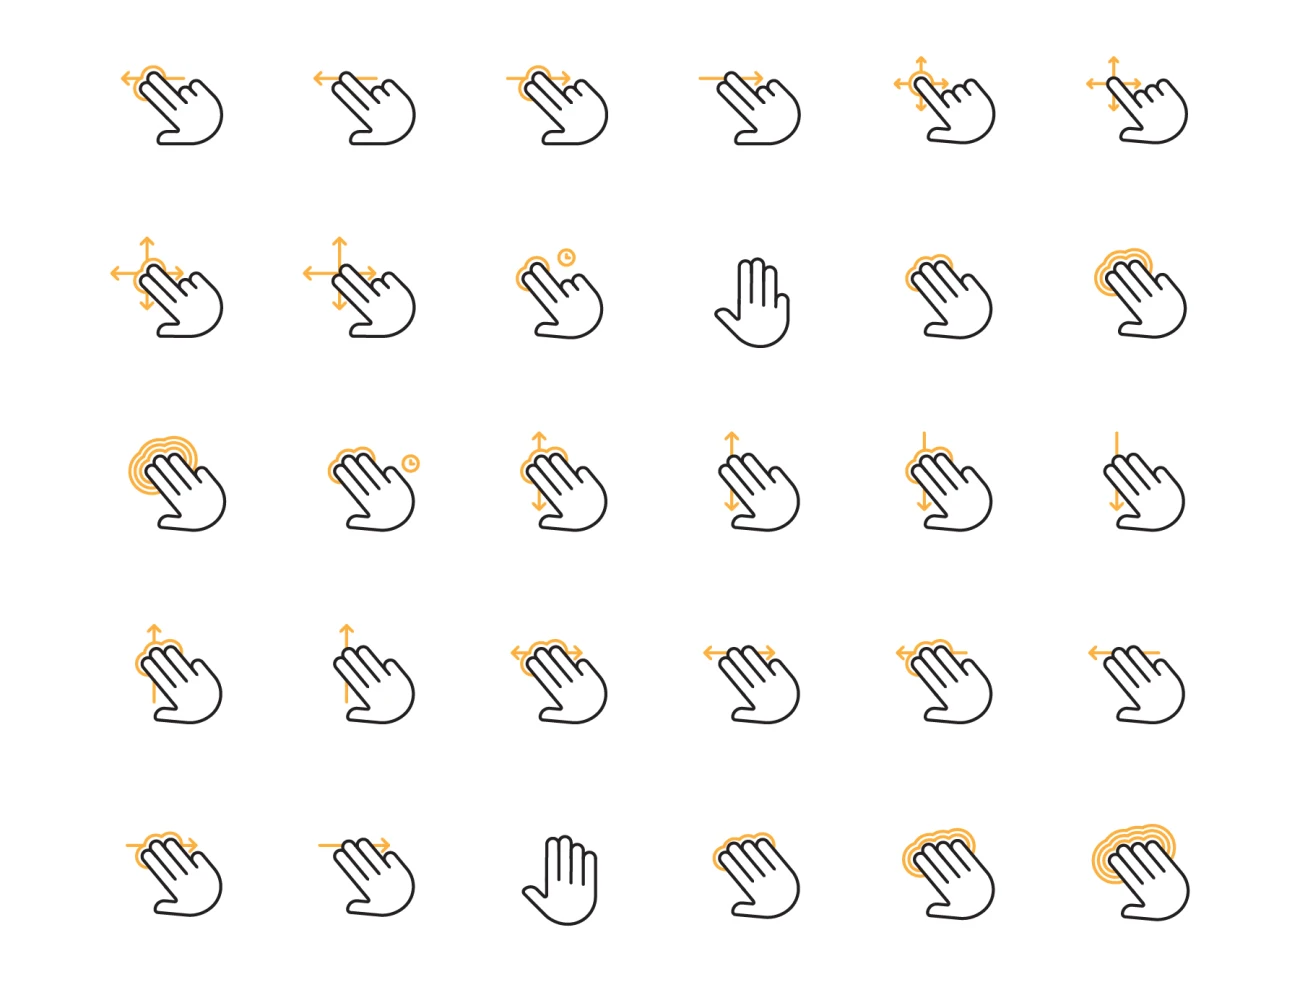 300款手势操作图标素材下载 300 Hand Gesture Icon Set .svg .png .jpeg插图7